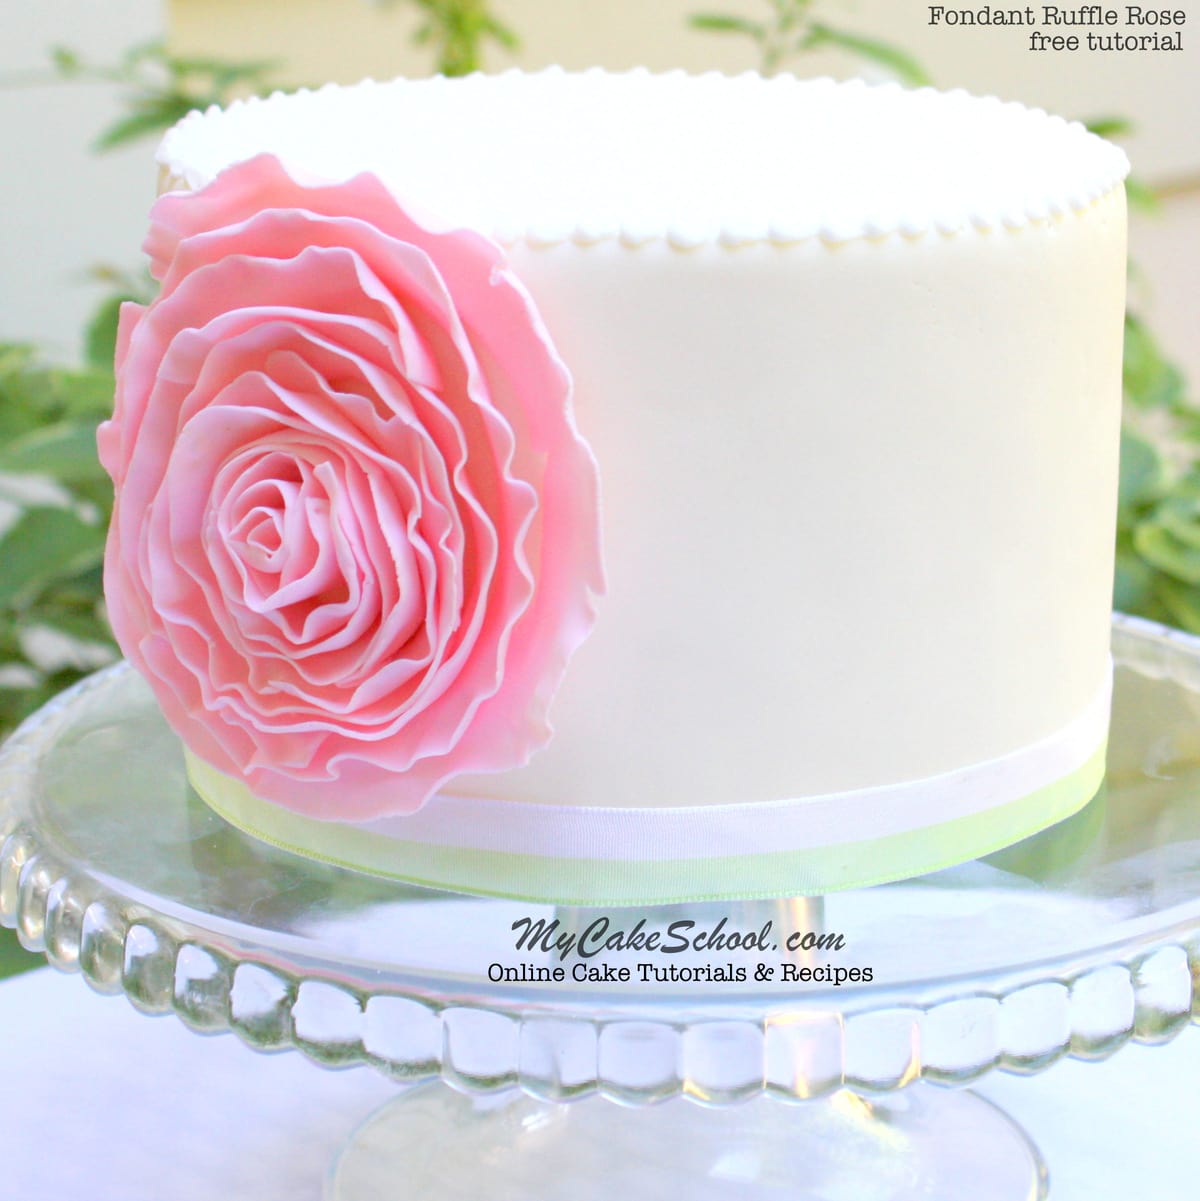 How to Make a Fondant Ruffle Rose! Free Cake Tutorial! | My Cake School